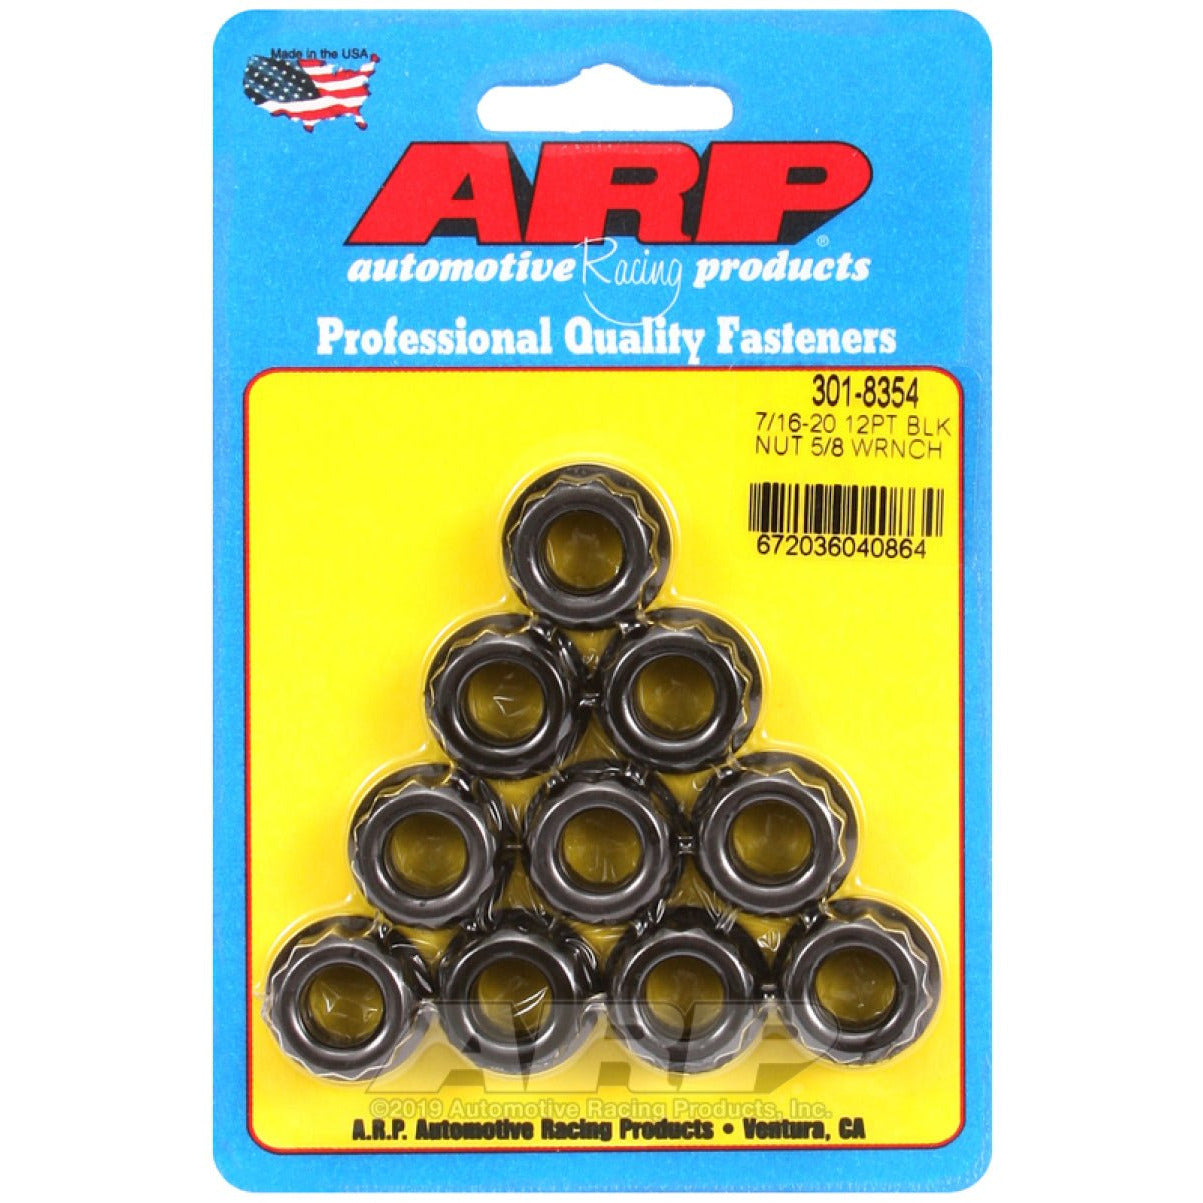 ARP 7/16-20 5/8 Socket 12 pt Nut Kit ARP Hardware Kits - Other